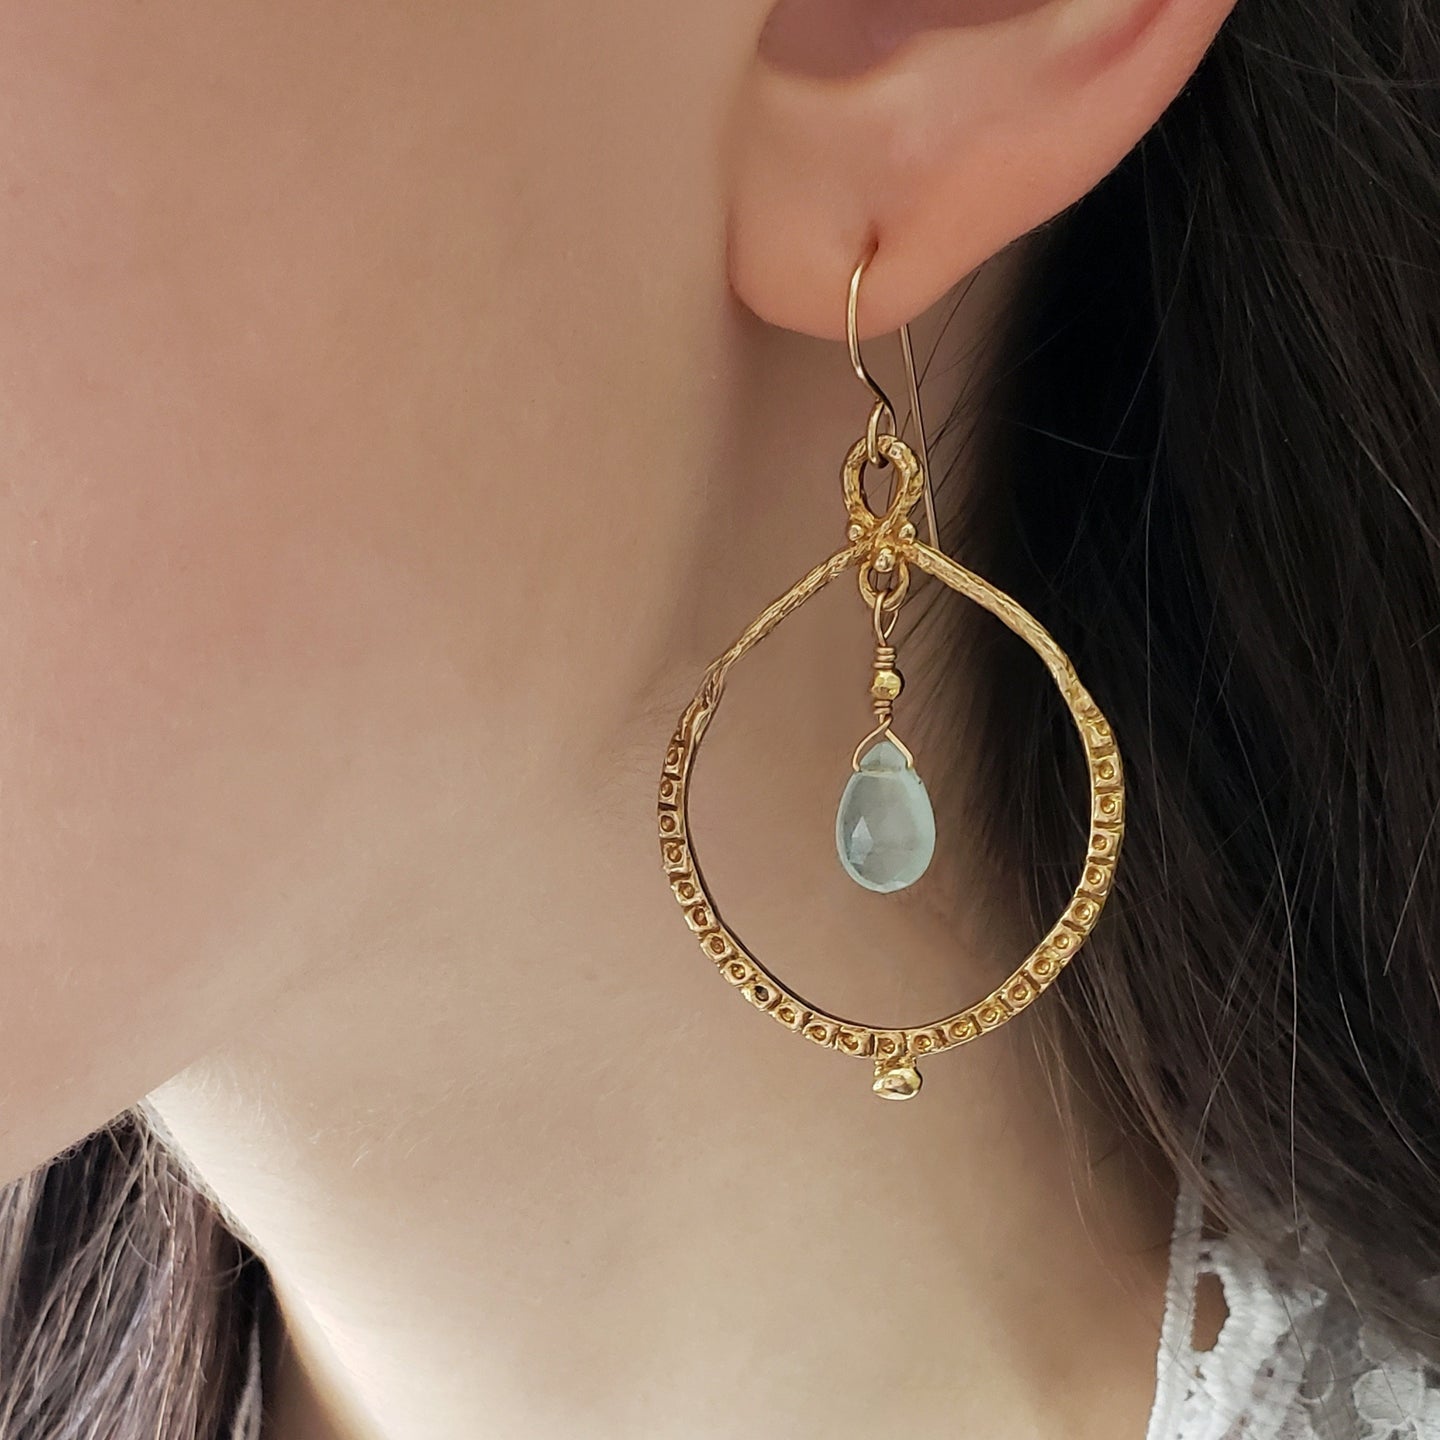 Empress Hoop Earrings in Bronze and Aquamarine